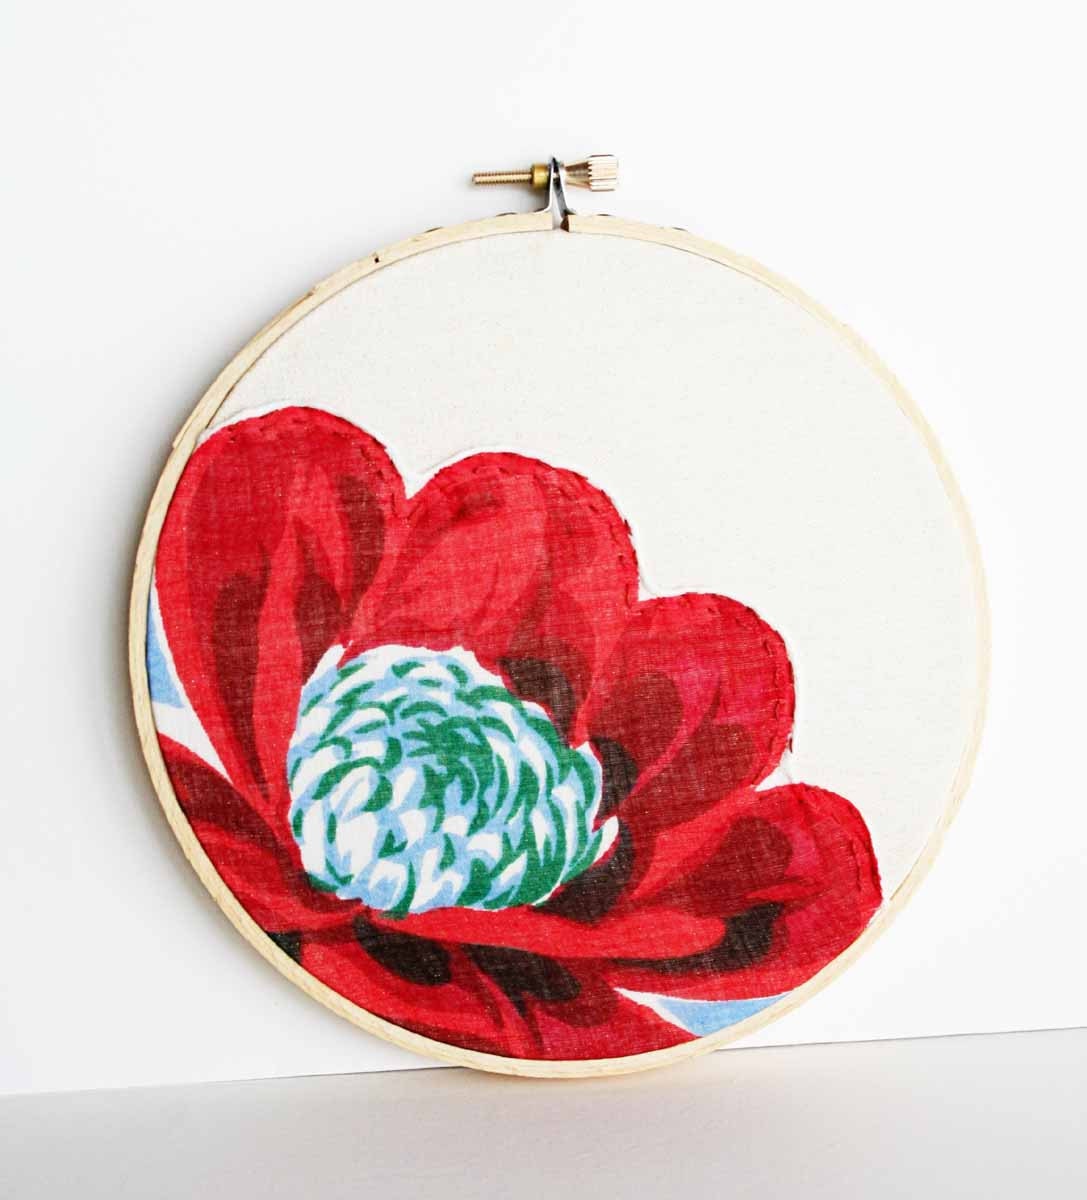 Vintage fabric embroidery hoop art - 6 inch size - makenziandmadilyn